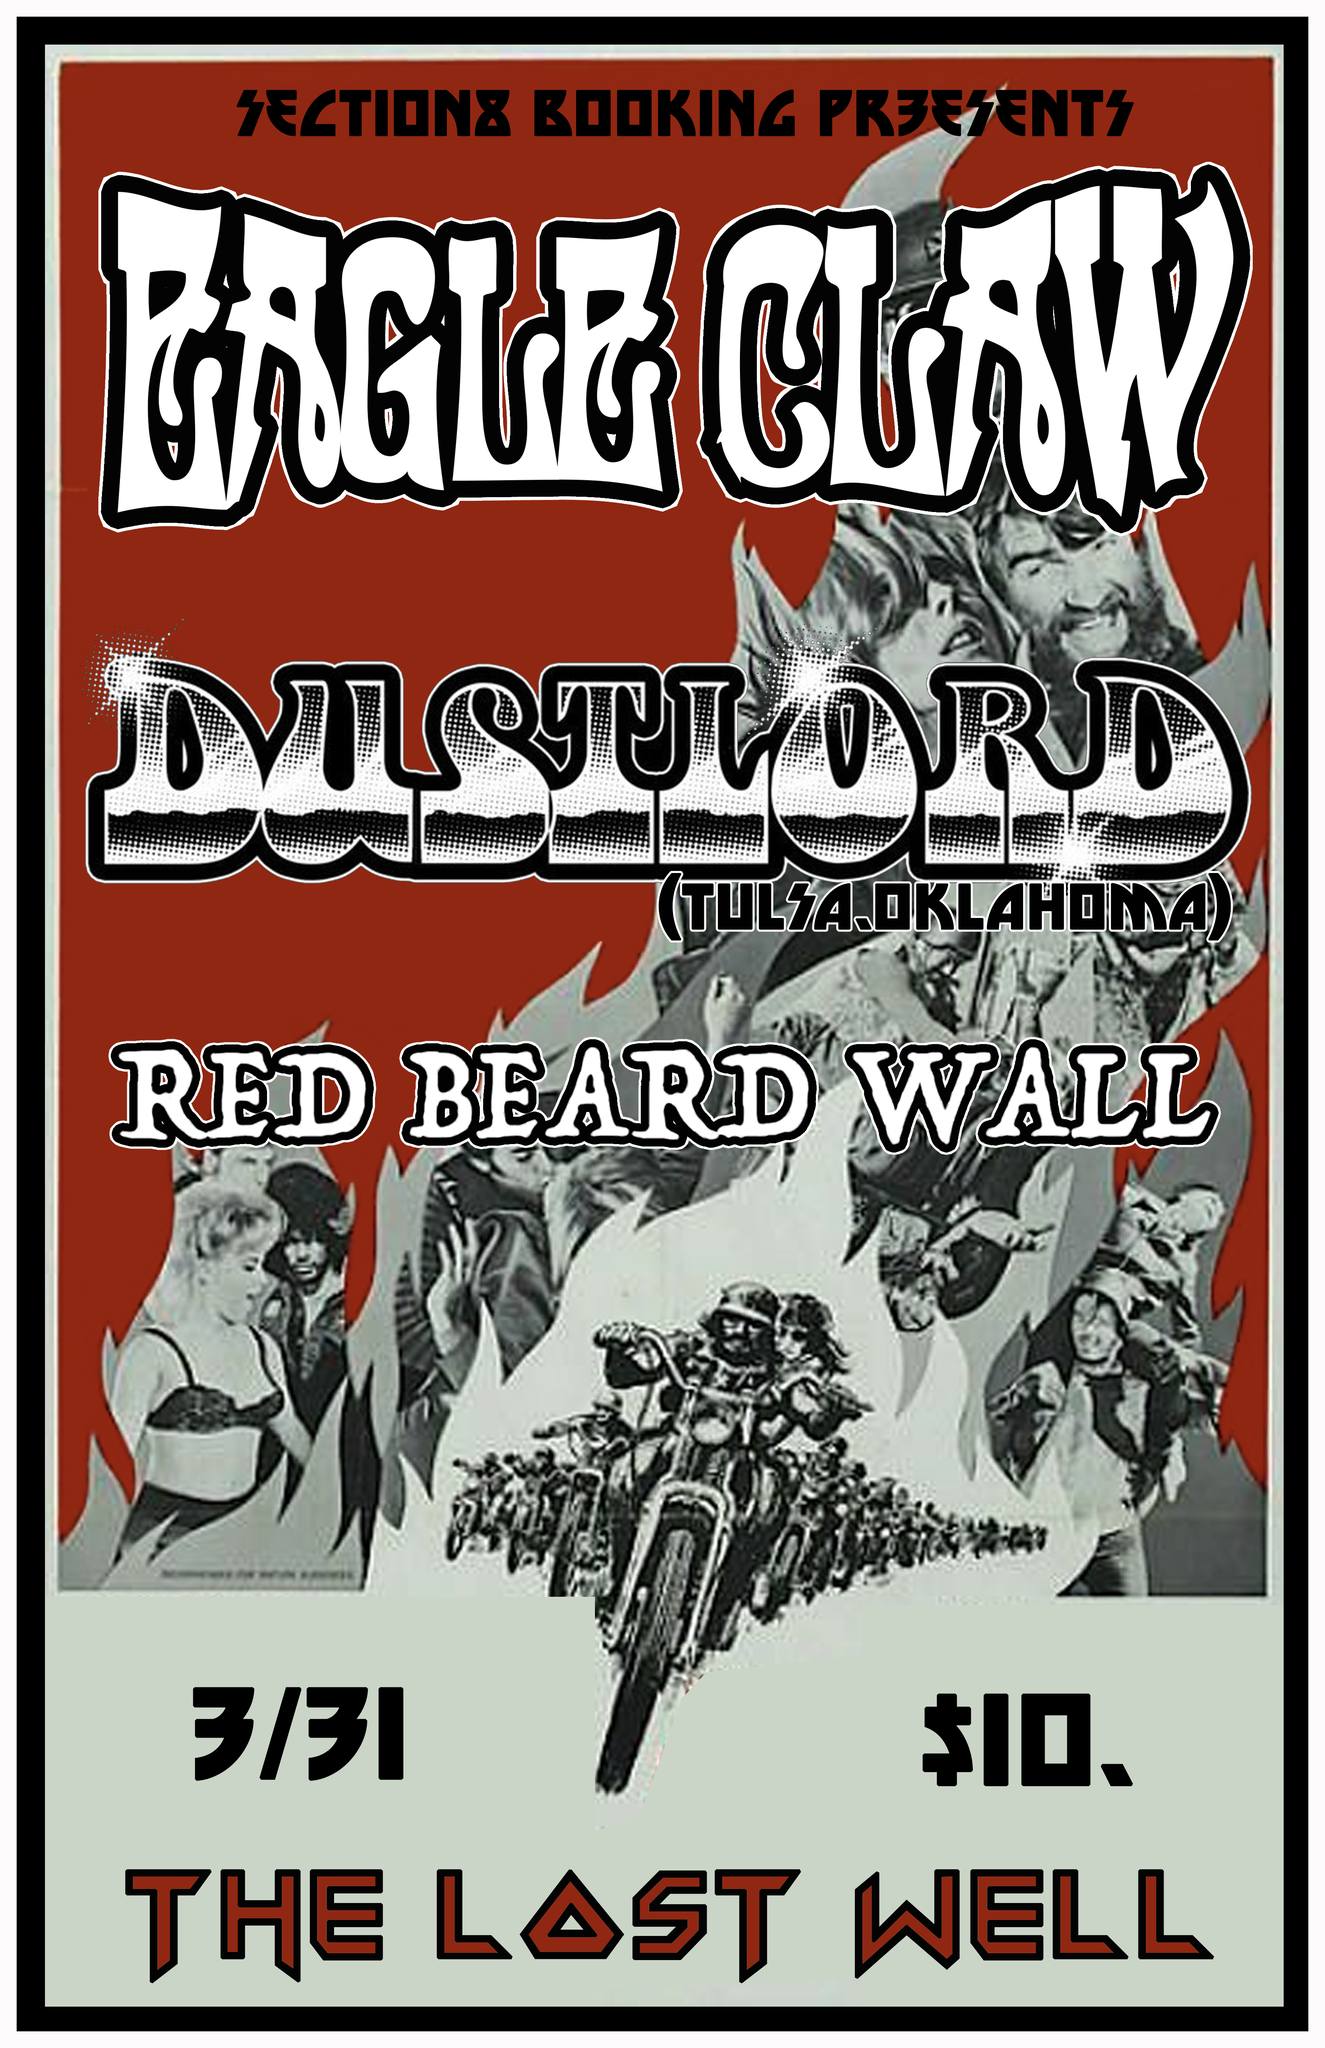 Eagle Claw, Dust Lord (OK), Red Beard Wall